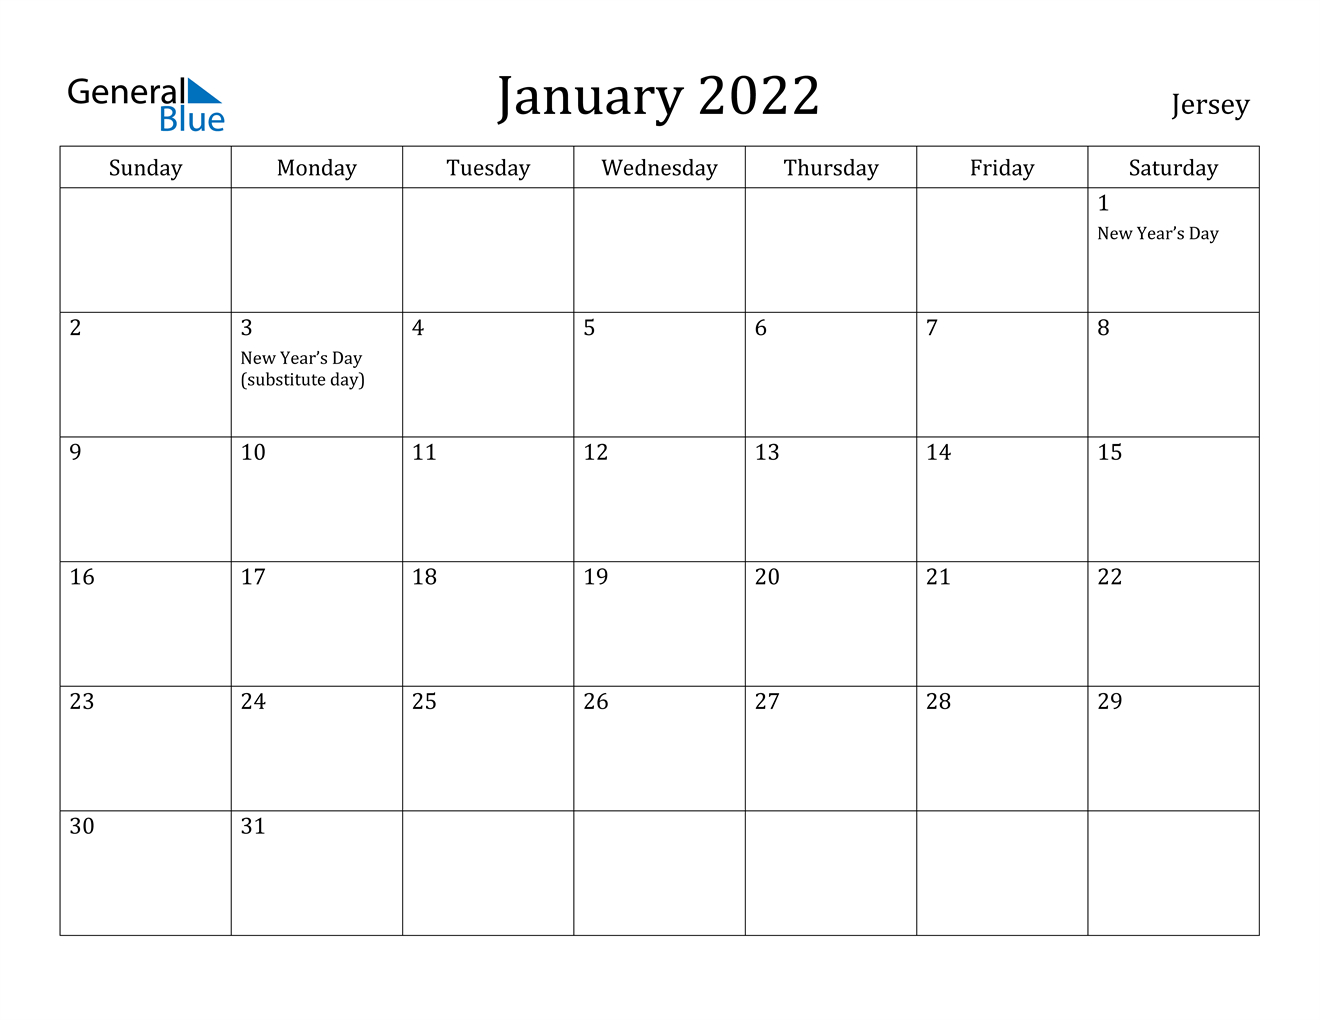 January 2022 Calendar - Jersey